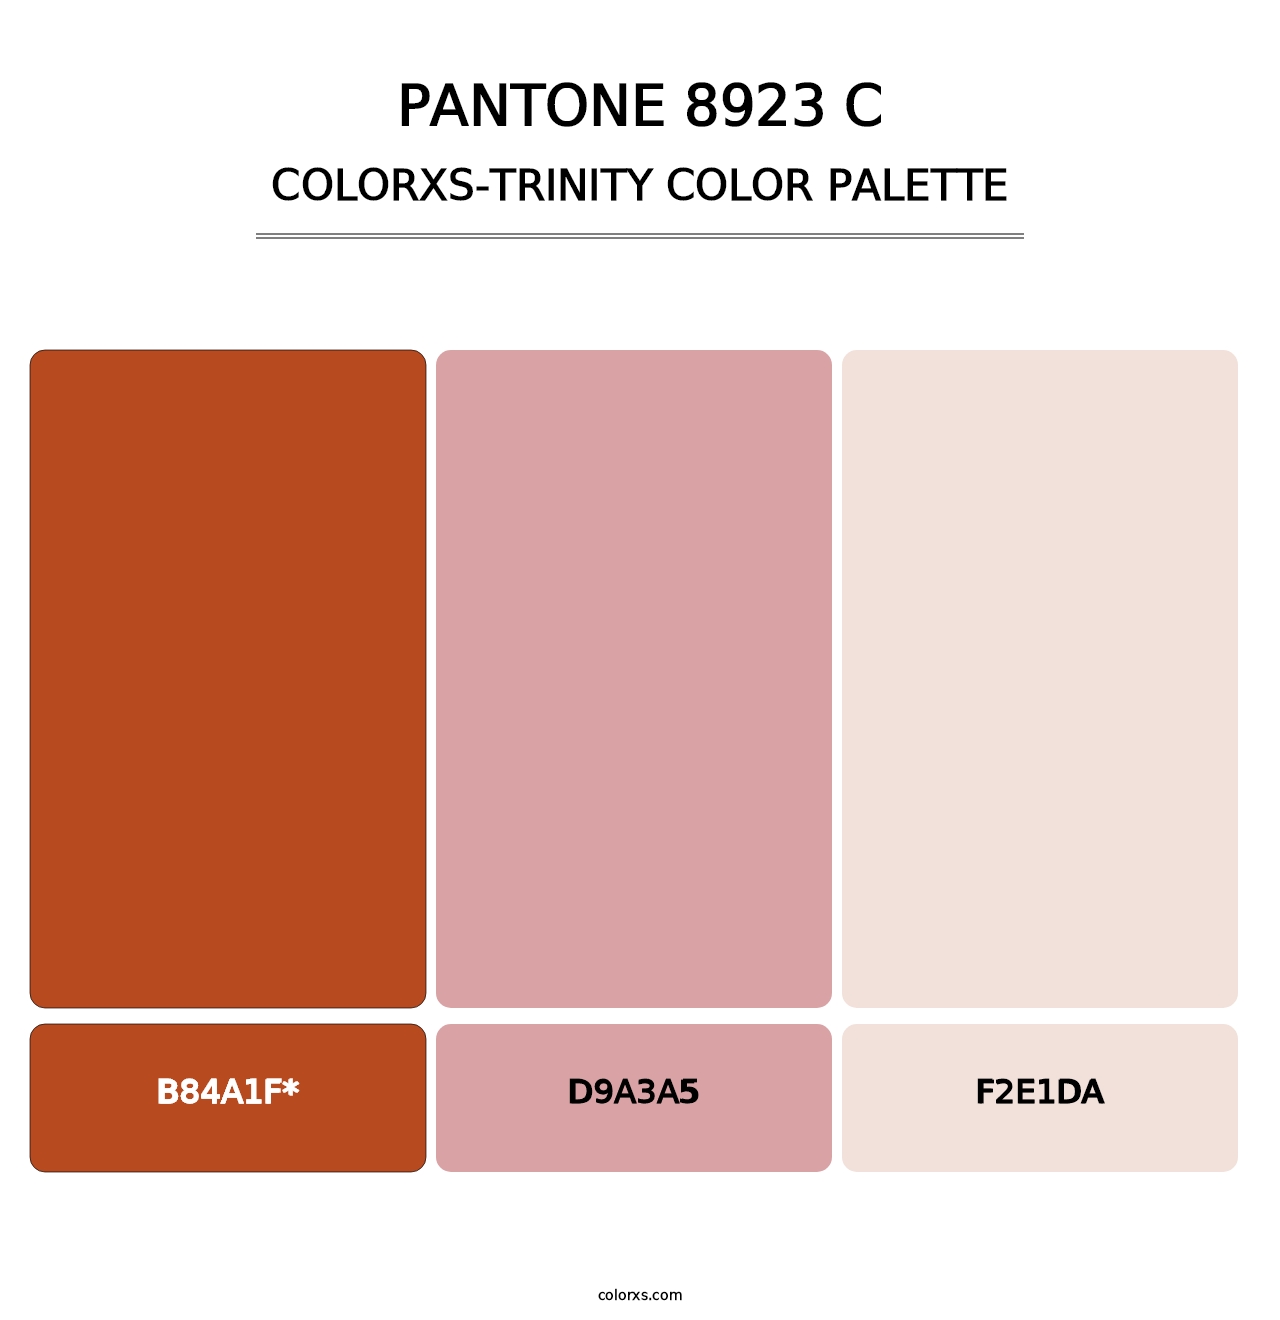 PANTONE 8923 C - Colorxs Trinity Palette